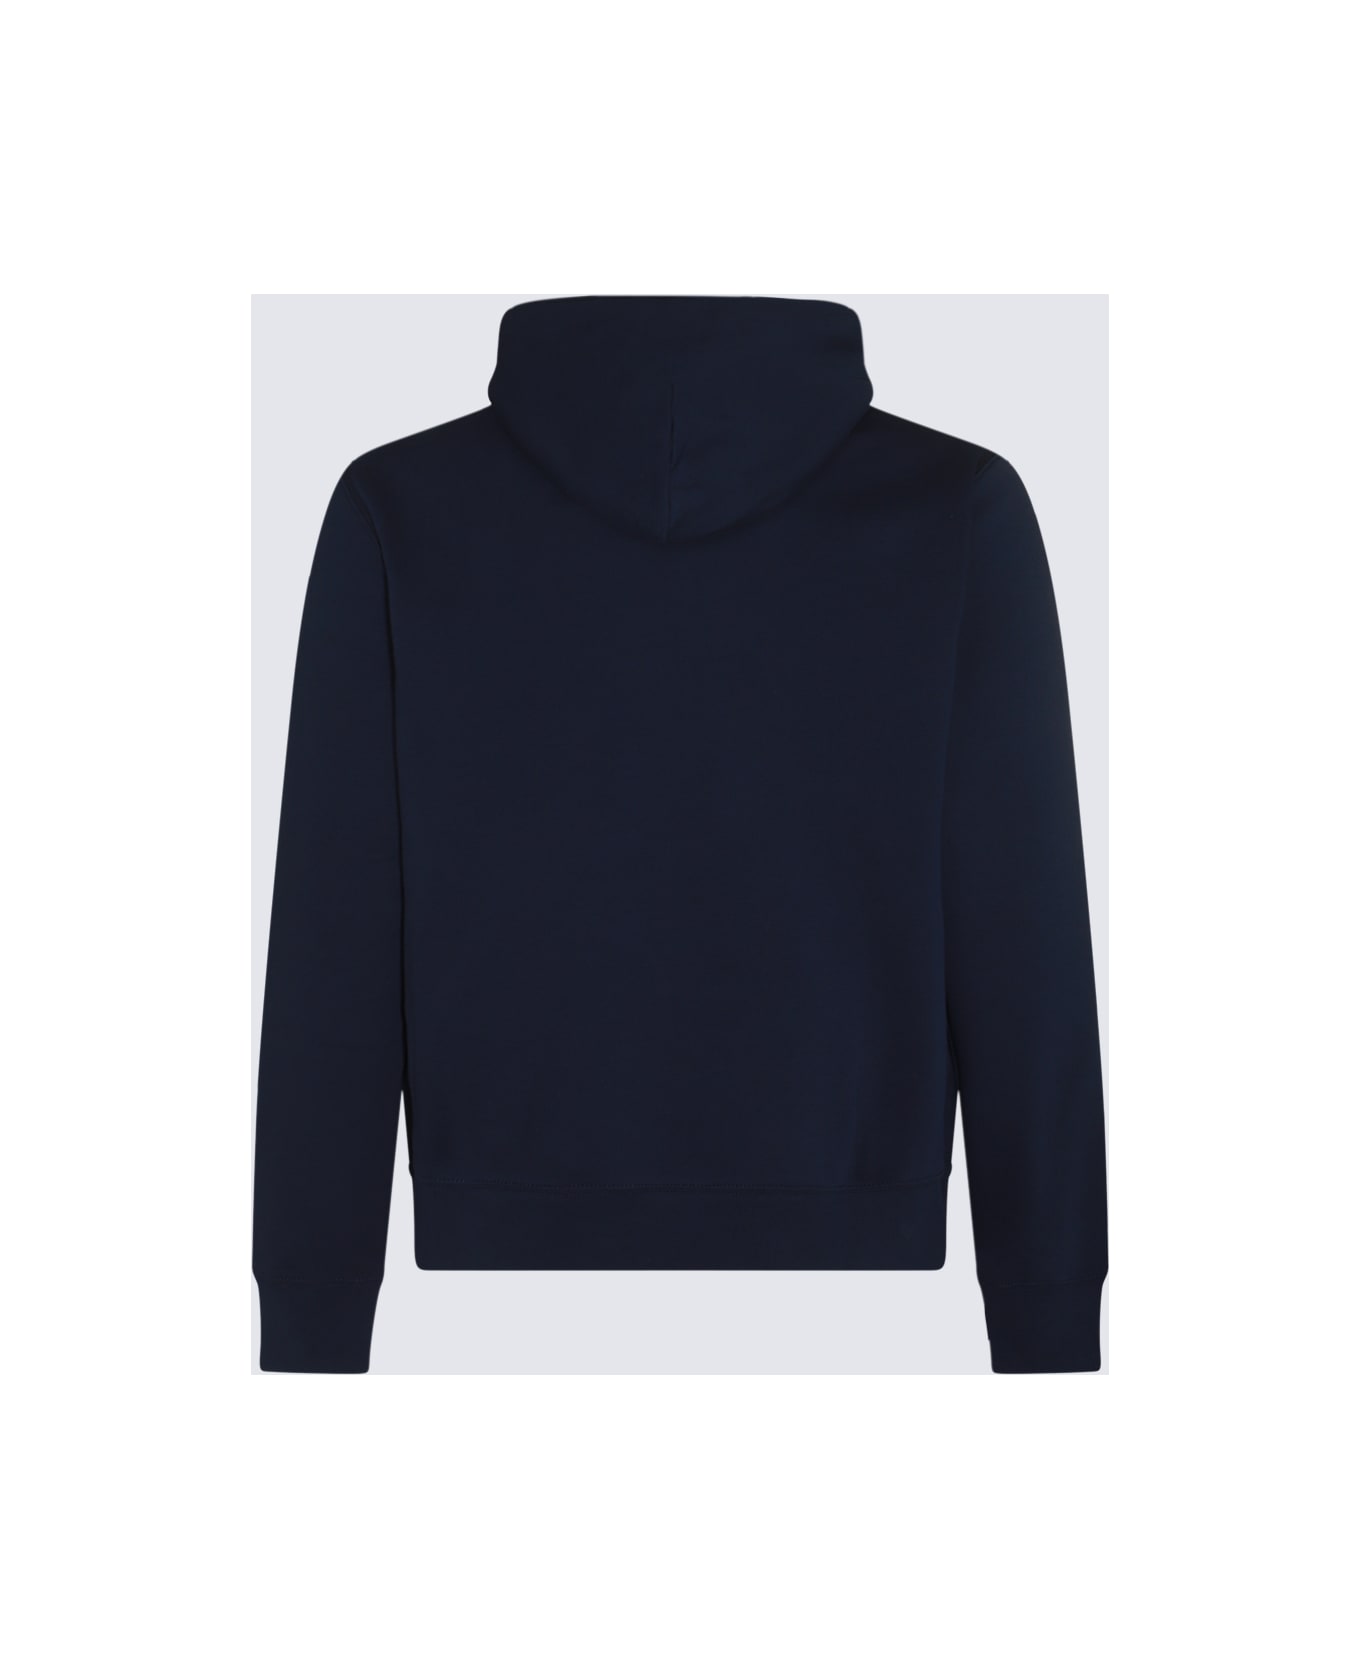 Polo Ralph Lauren Navy Blue Cotton Sweatshirt - CR23 CRUISE NAVY PAINT BEAR